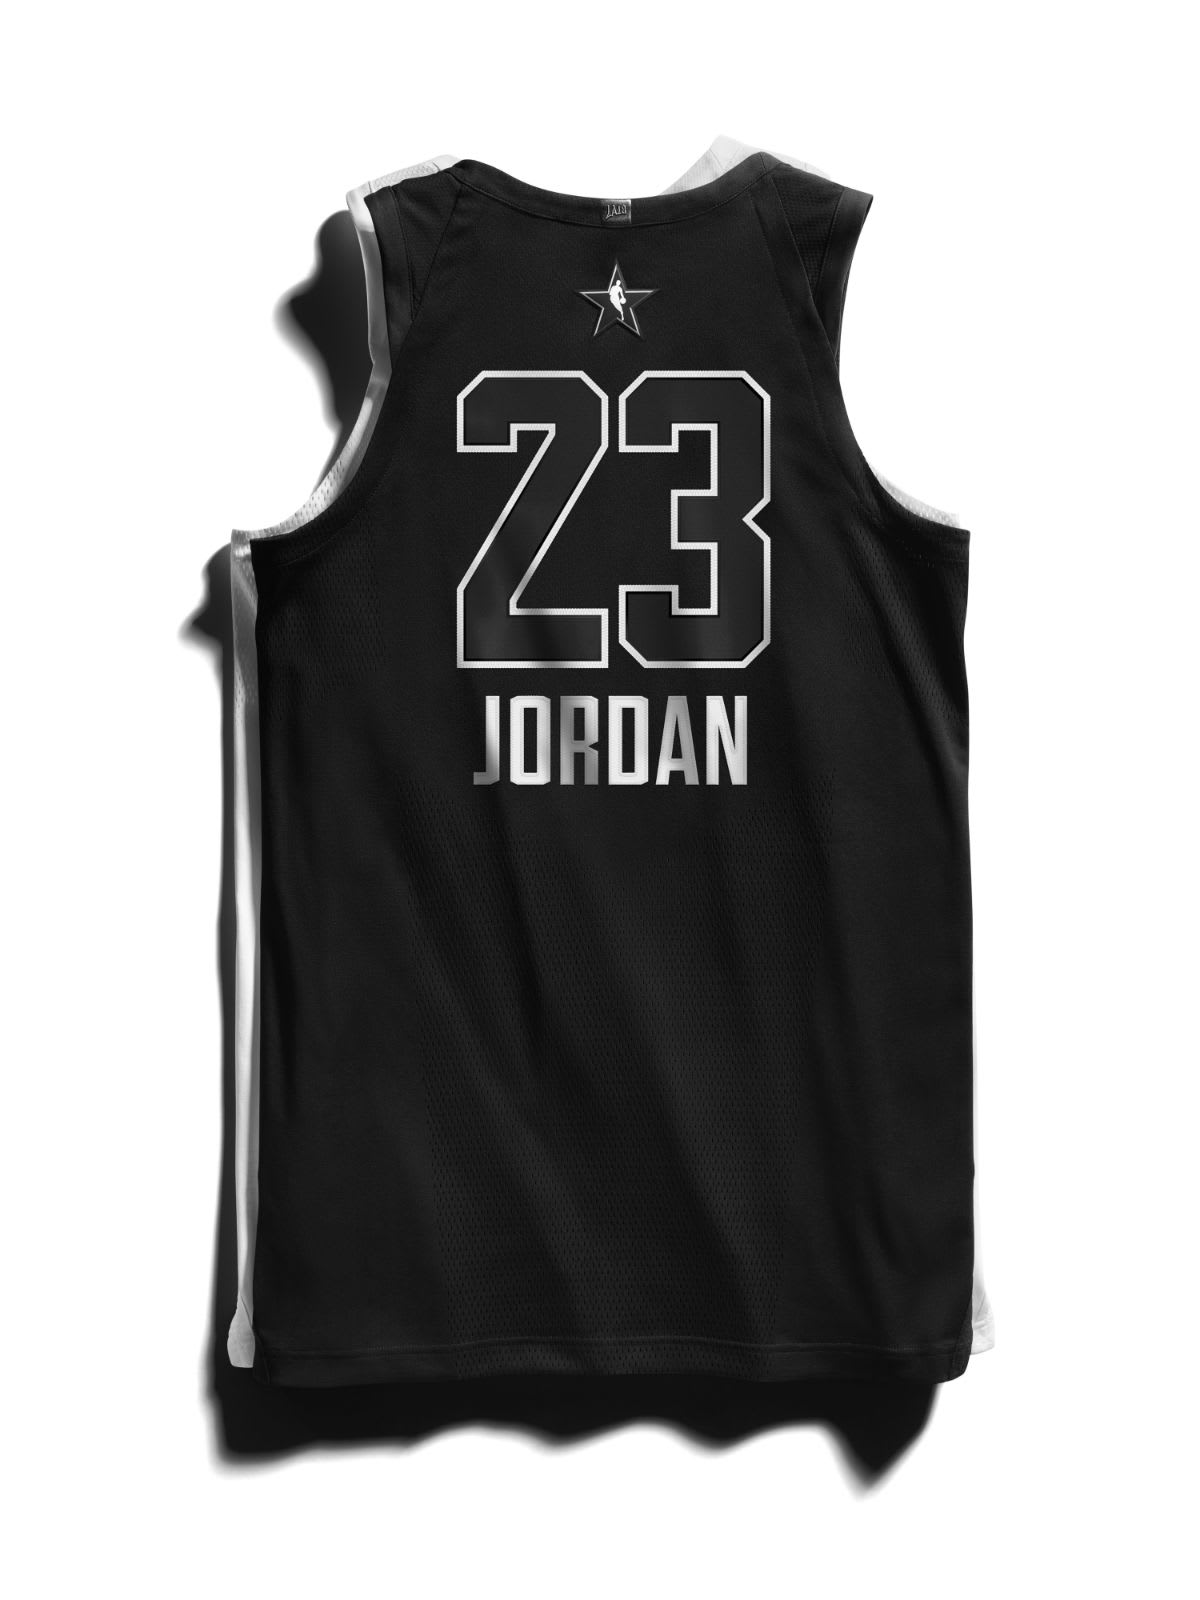 Michael Jordan 2018 NBA All Star Jersey